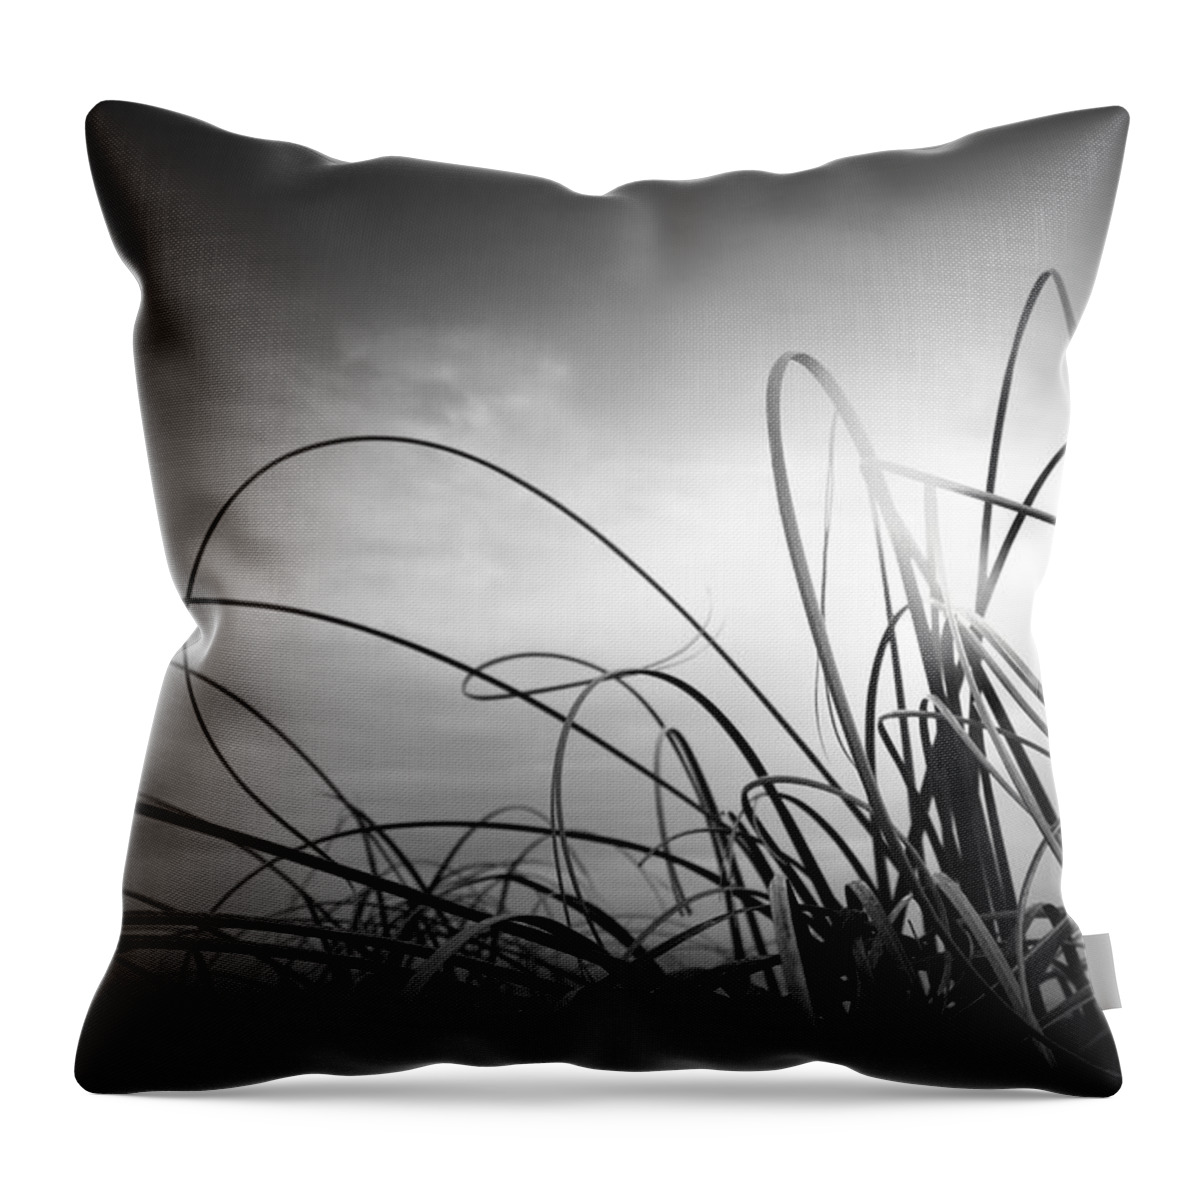 Grass Throw Pillow featuring the photograph Dancing Queen by Dorit Fuhg